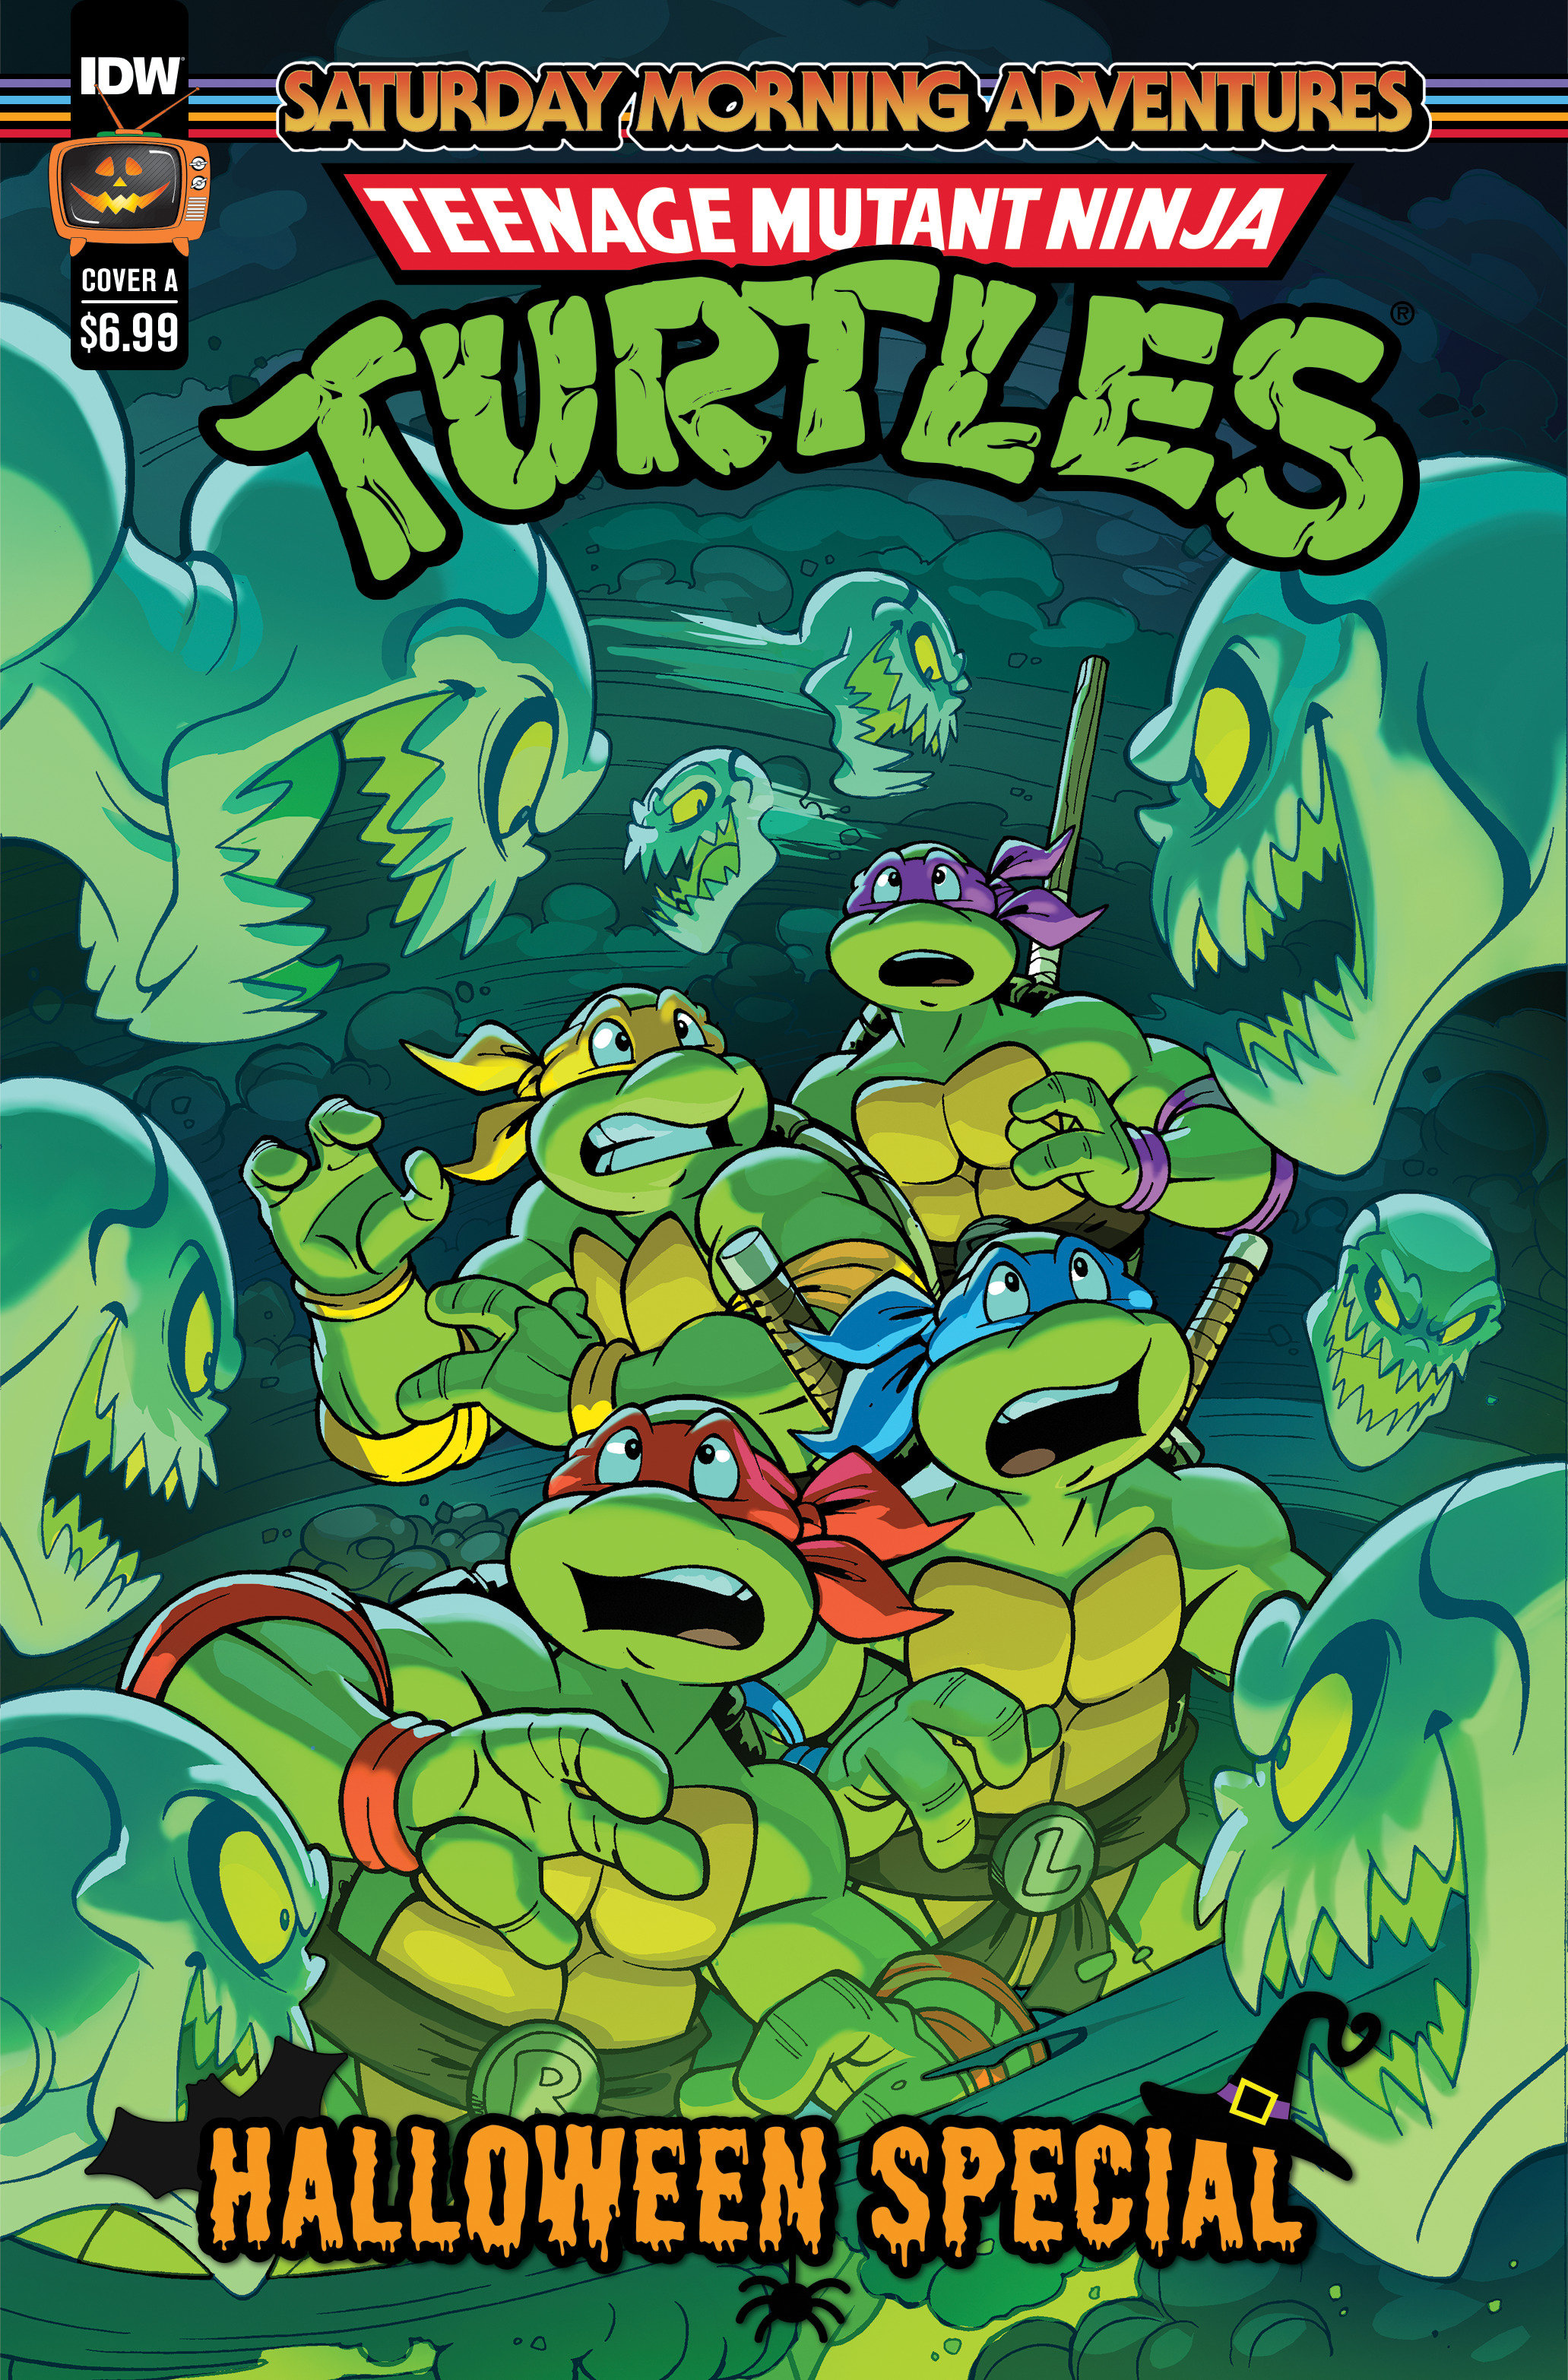 Teenage Mutant Ninja Turtles Saturday Morning Adventures Halloween Special Cover A Lawrence